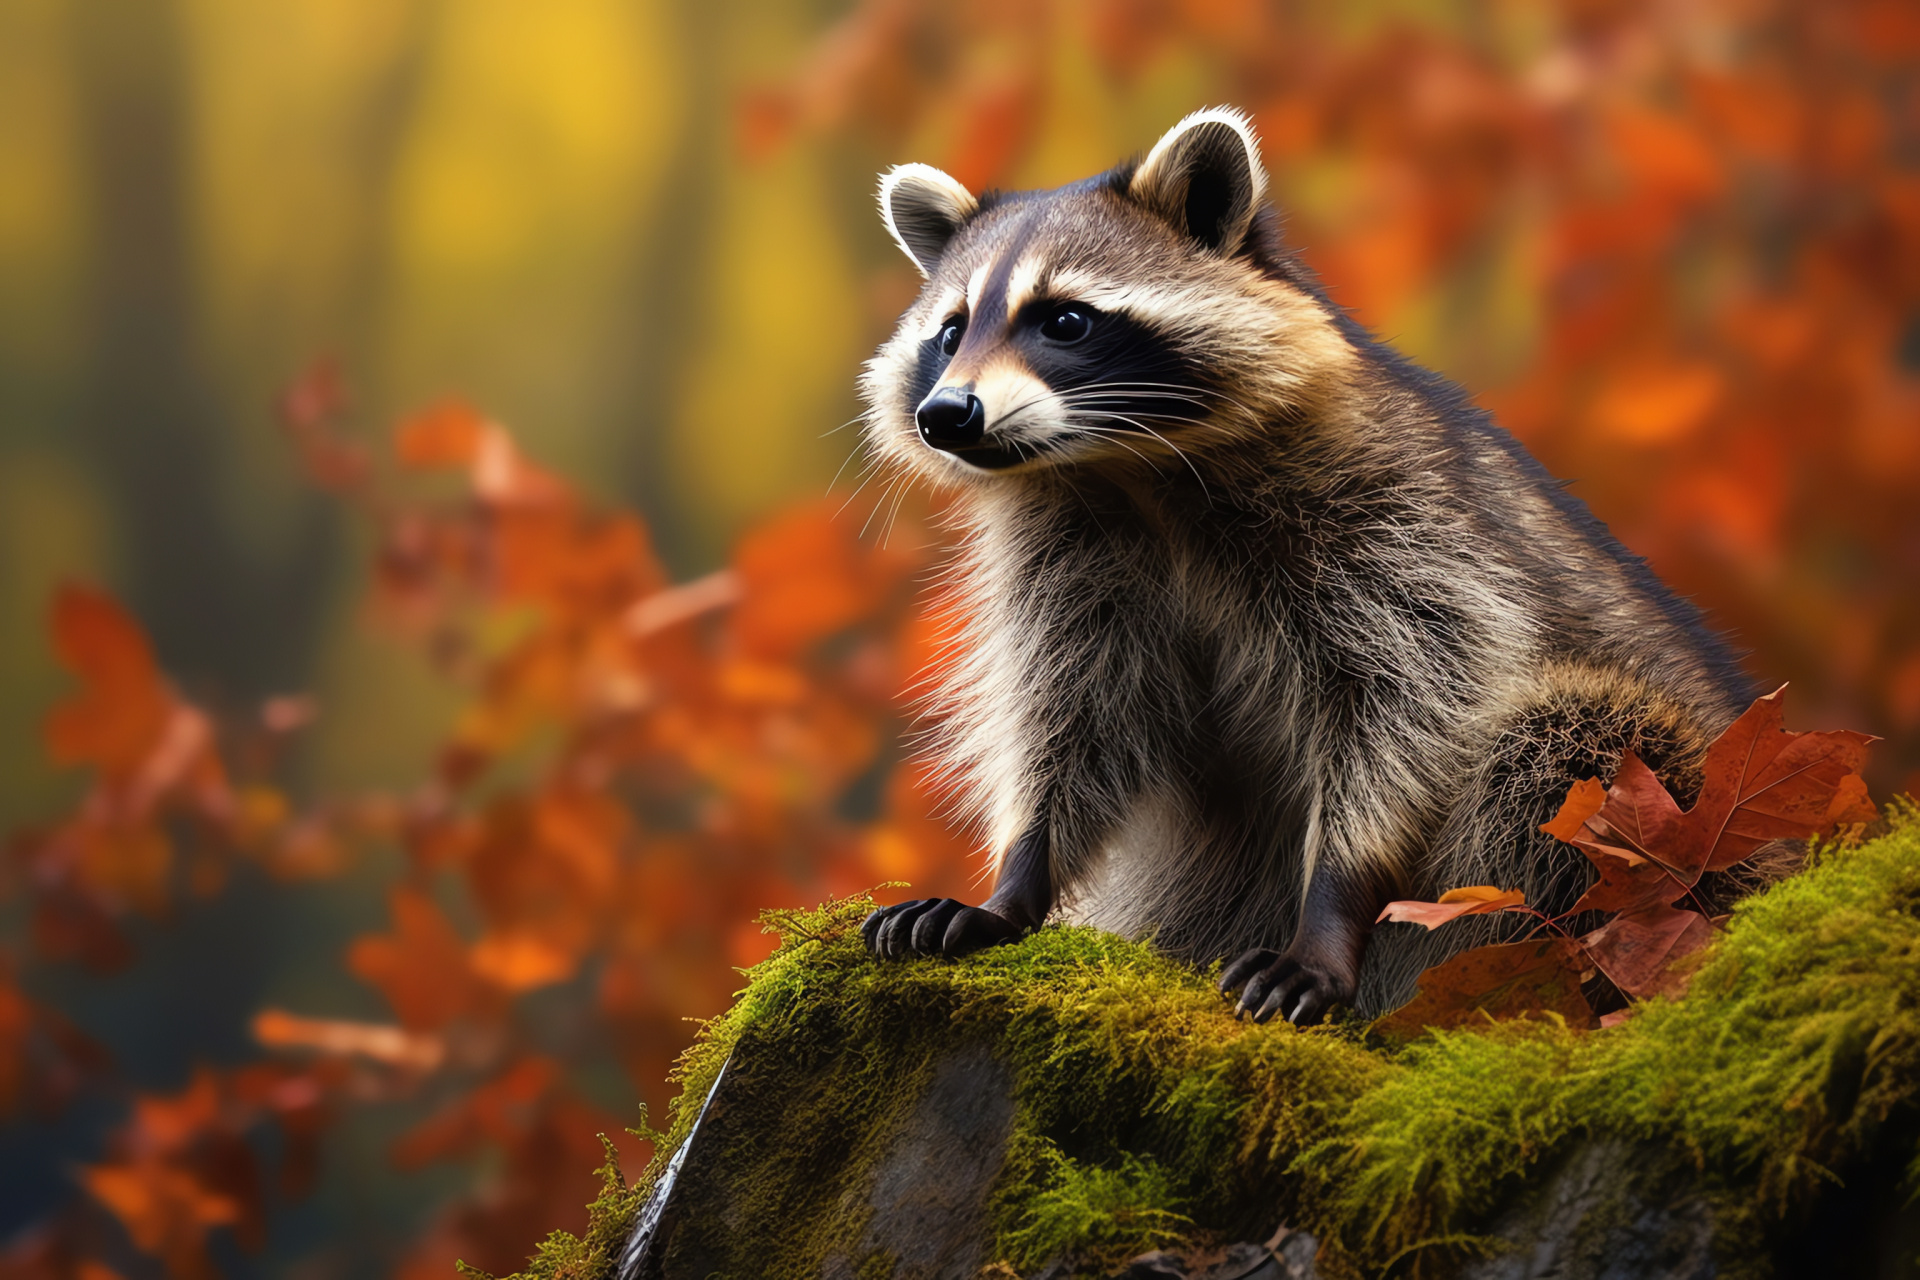 Raccoon inquisitiveness, furry mammal, omnivorous creature, playful posture, forest fauna, HD Desktop Image